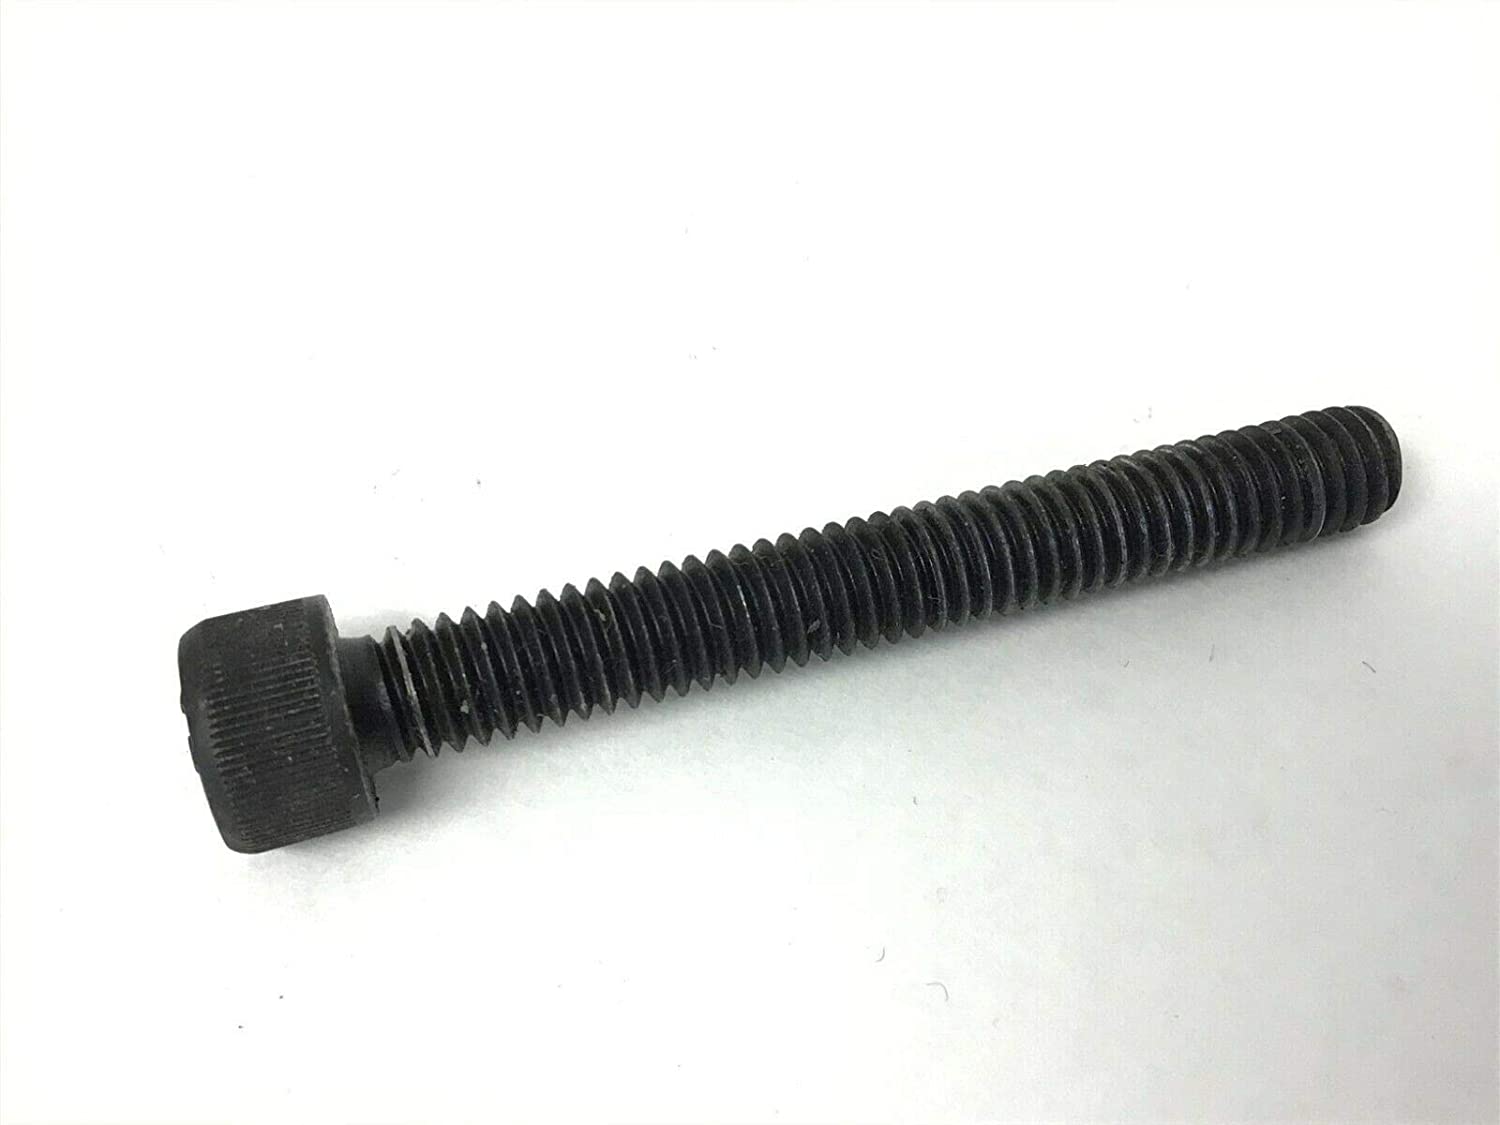 Hexagonal socket screw Rear Roller